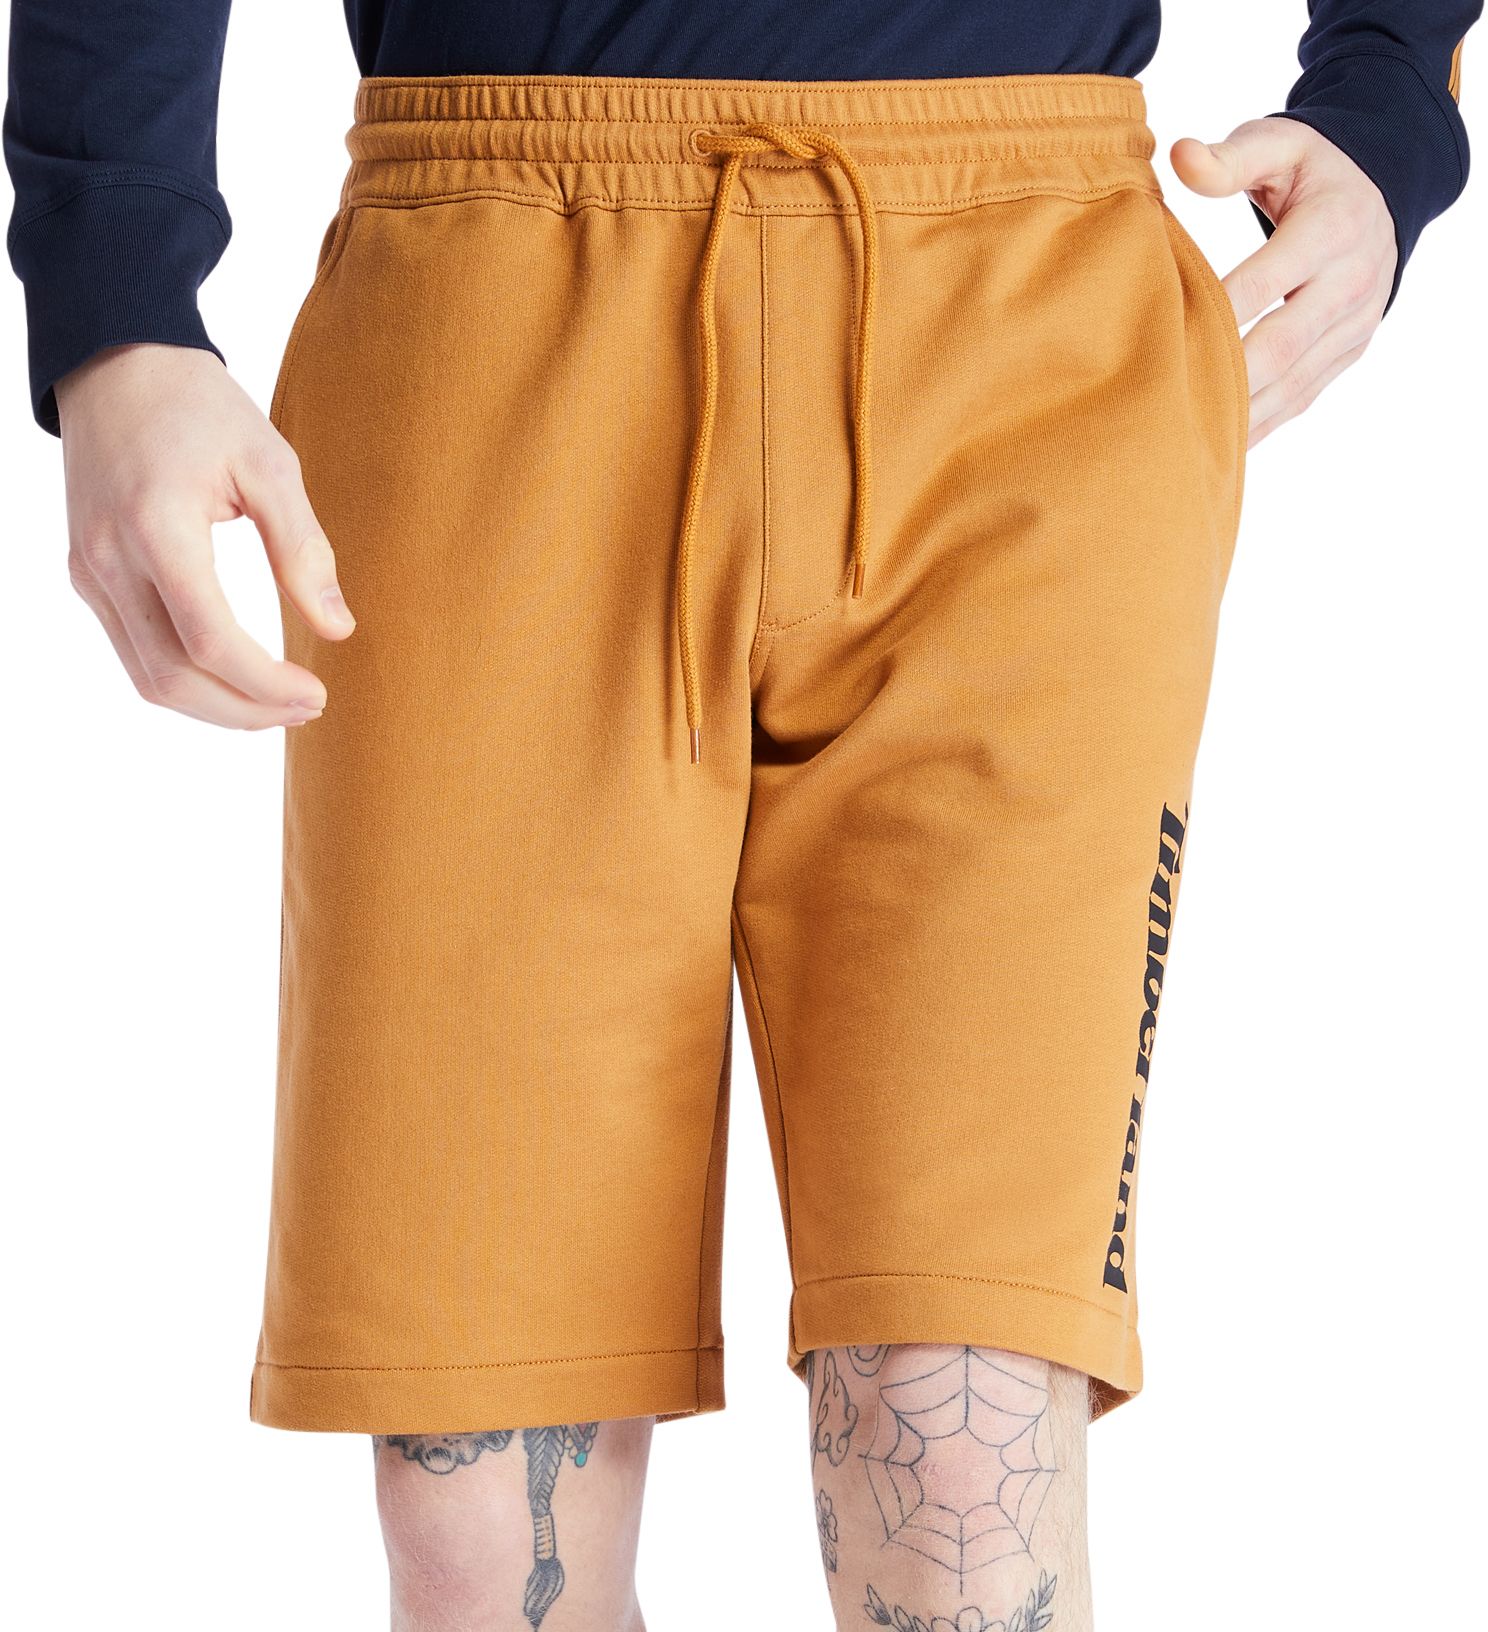 timberland shorts